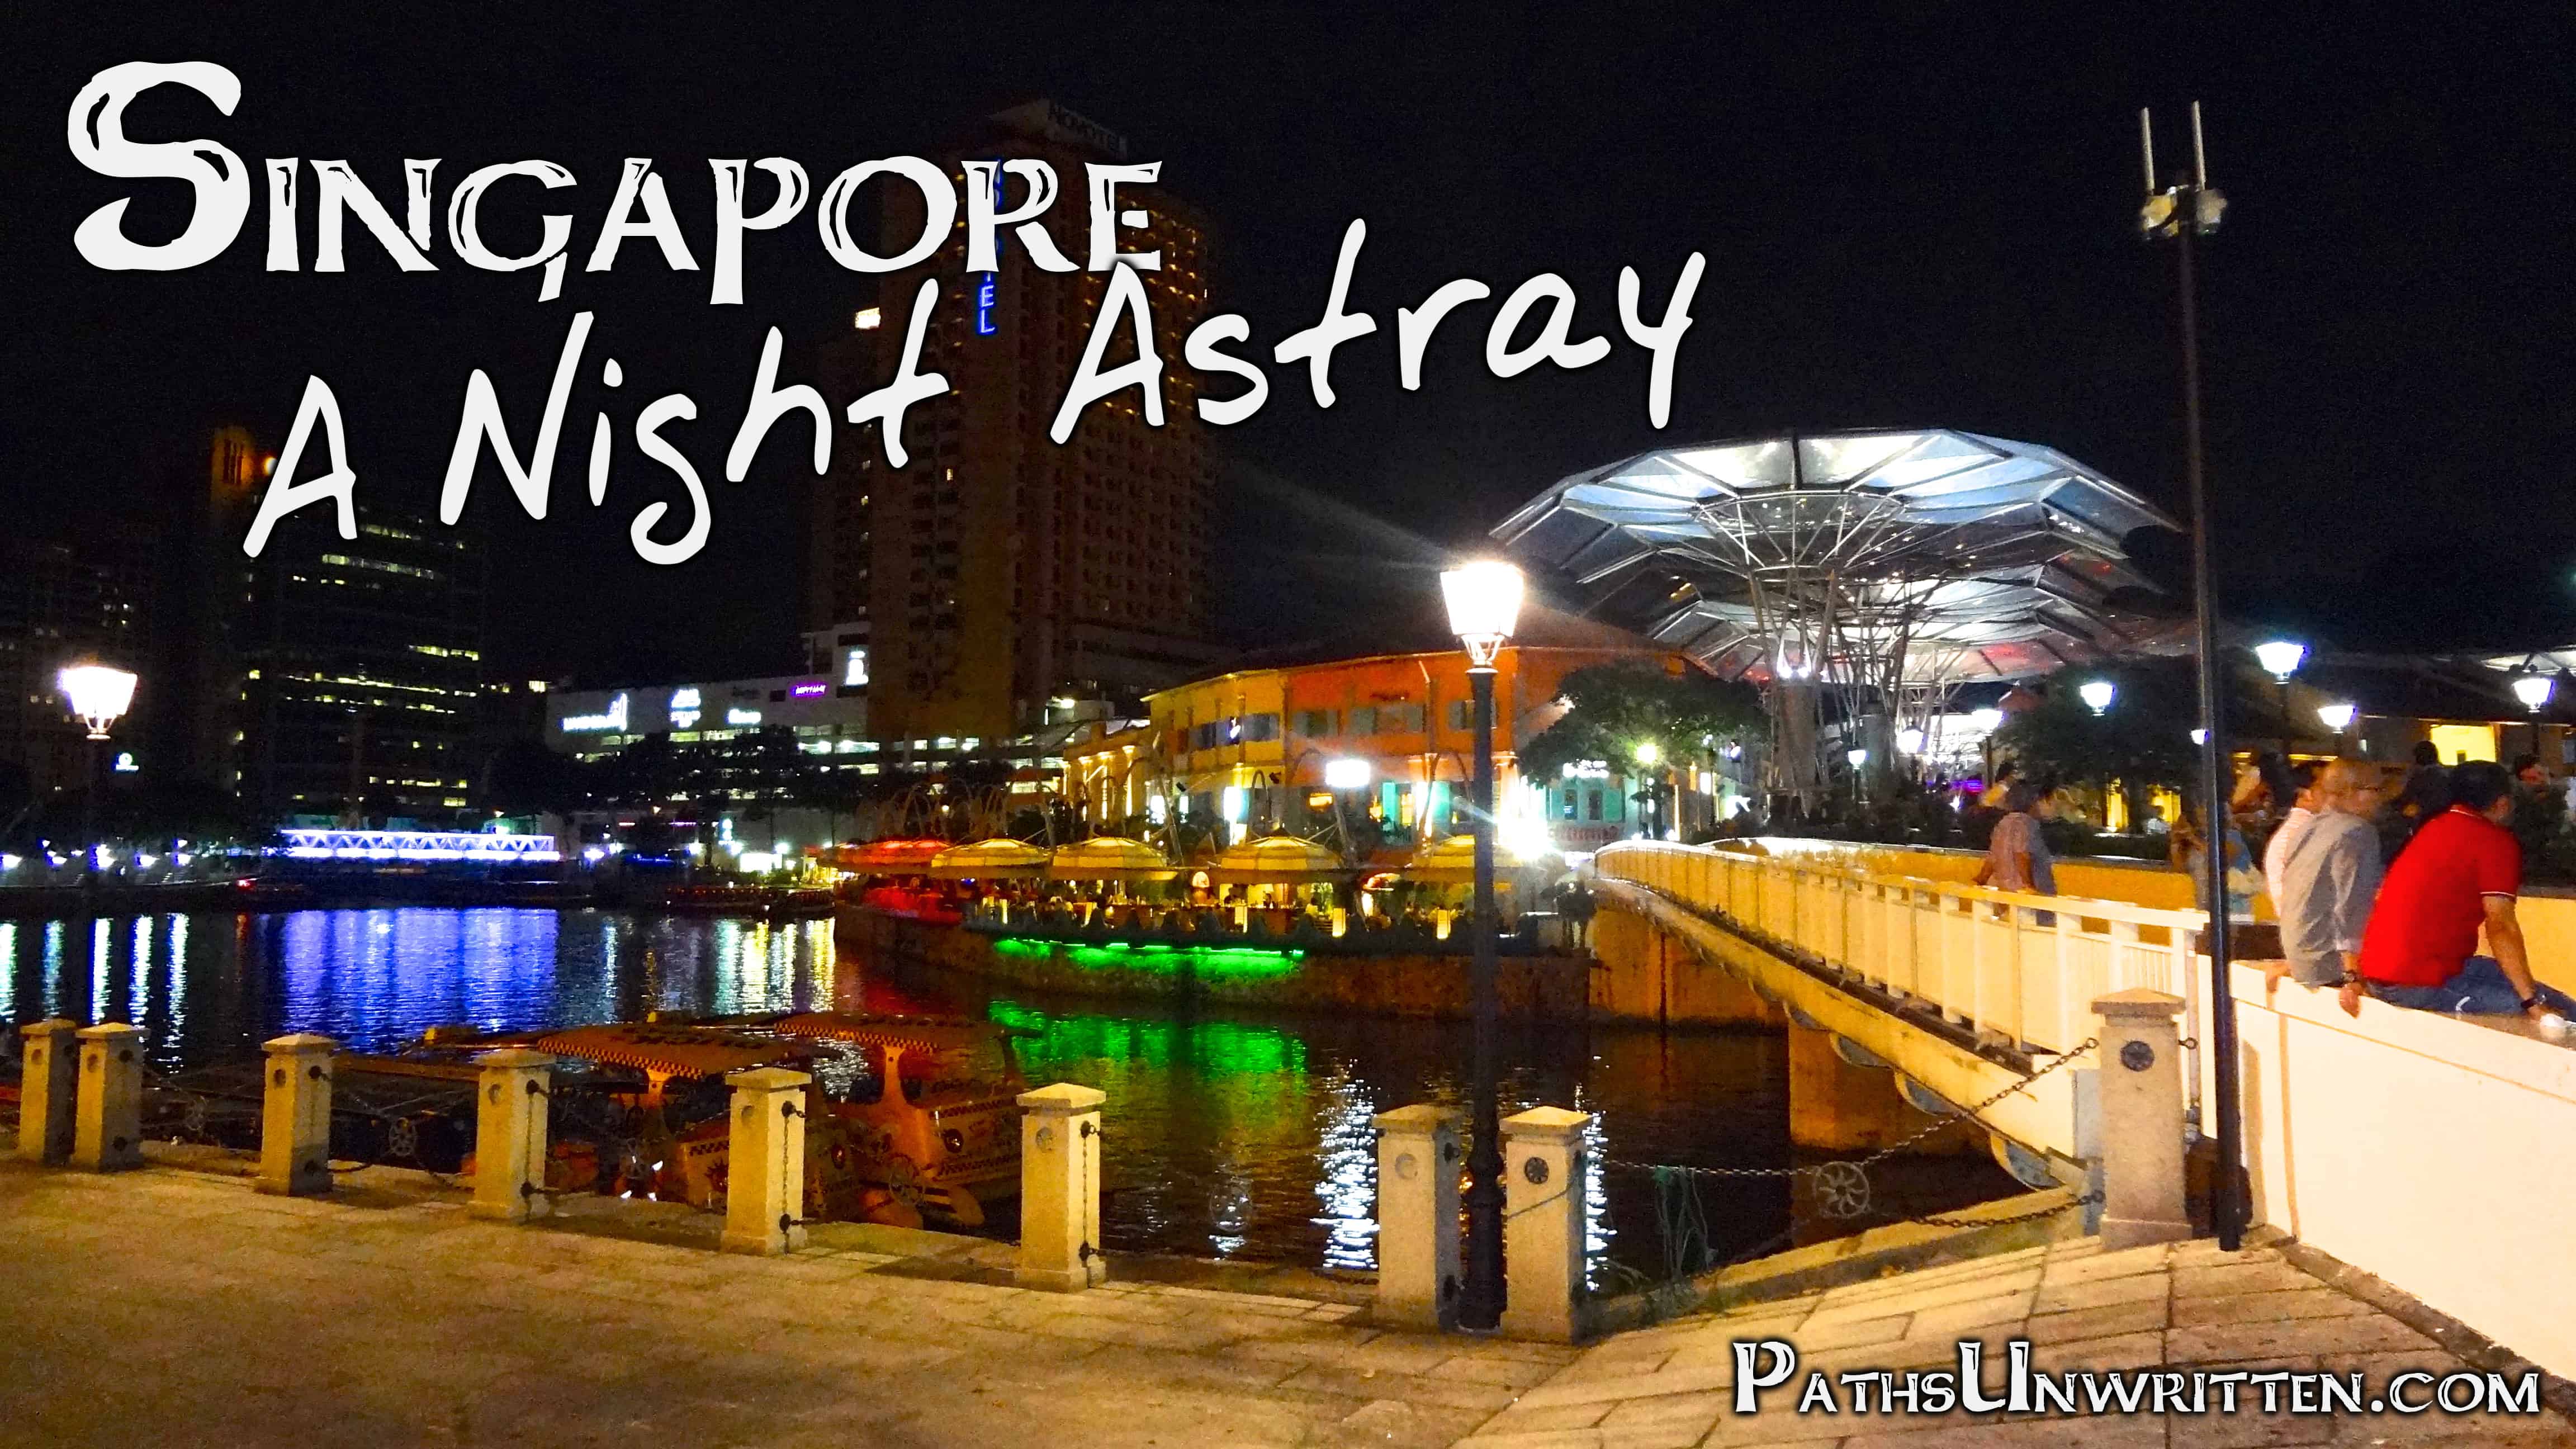 Singapore:  A Night Astray